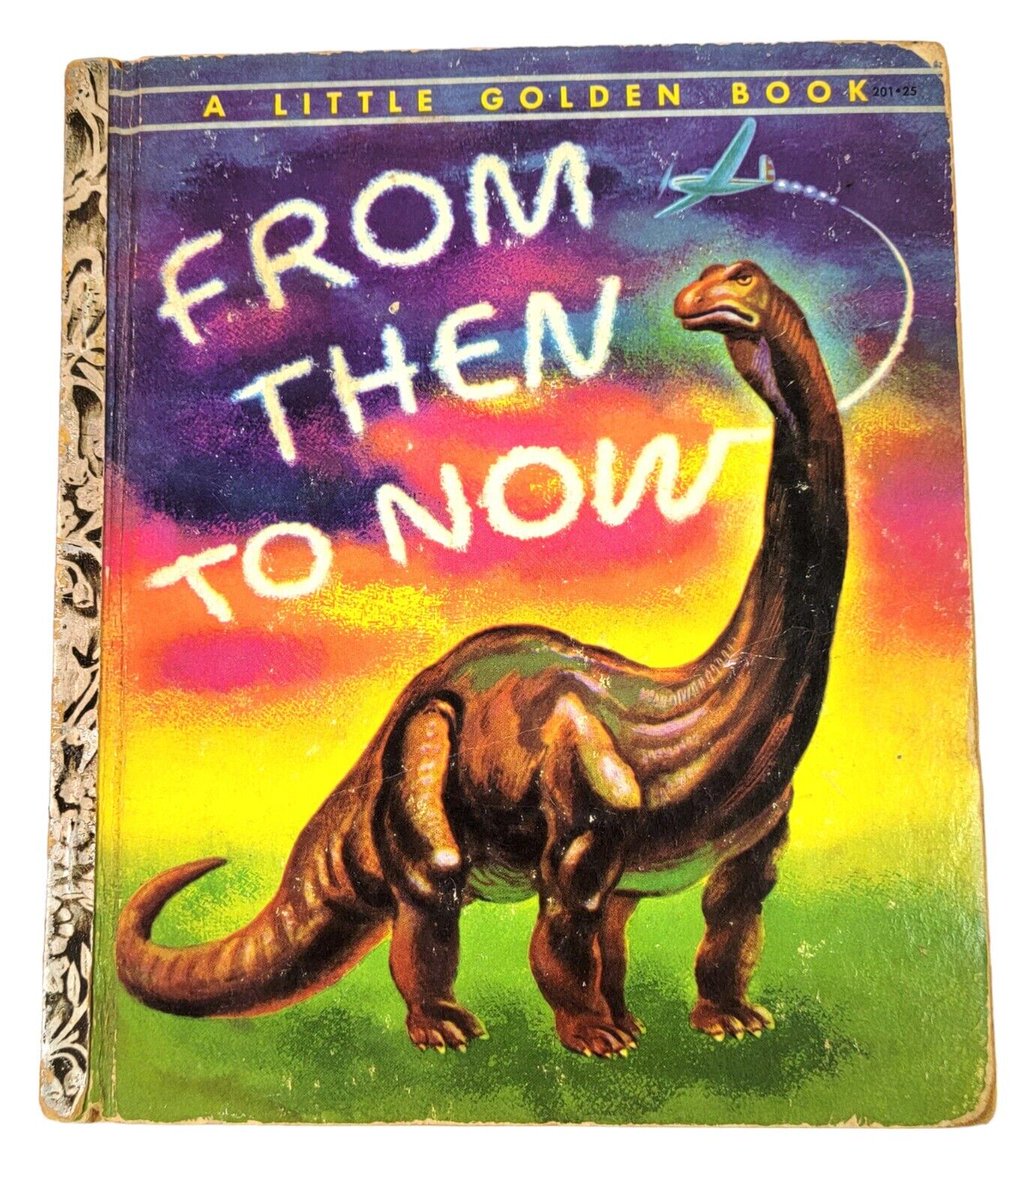 Vintage Little Golden Book Dinosaurs FROM THEN TO NOW 'A' 1954 First Edition #EBAYSELLER #EBAYFINDS
$14.99
➤ ebay.com/itm/Vintage-Li…